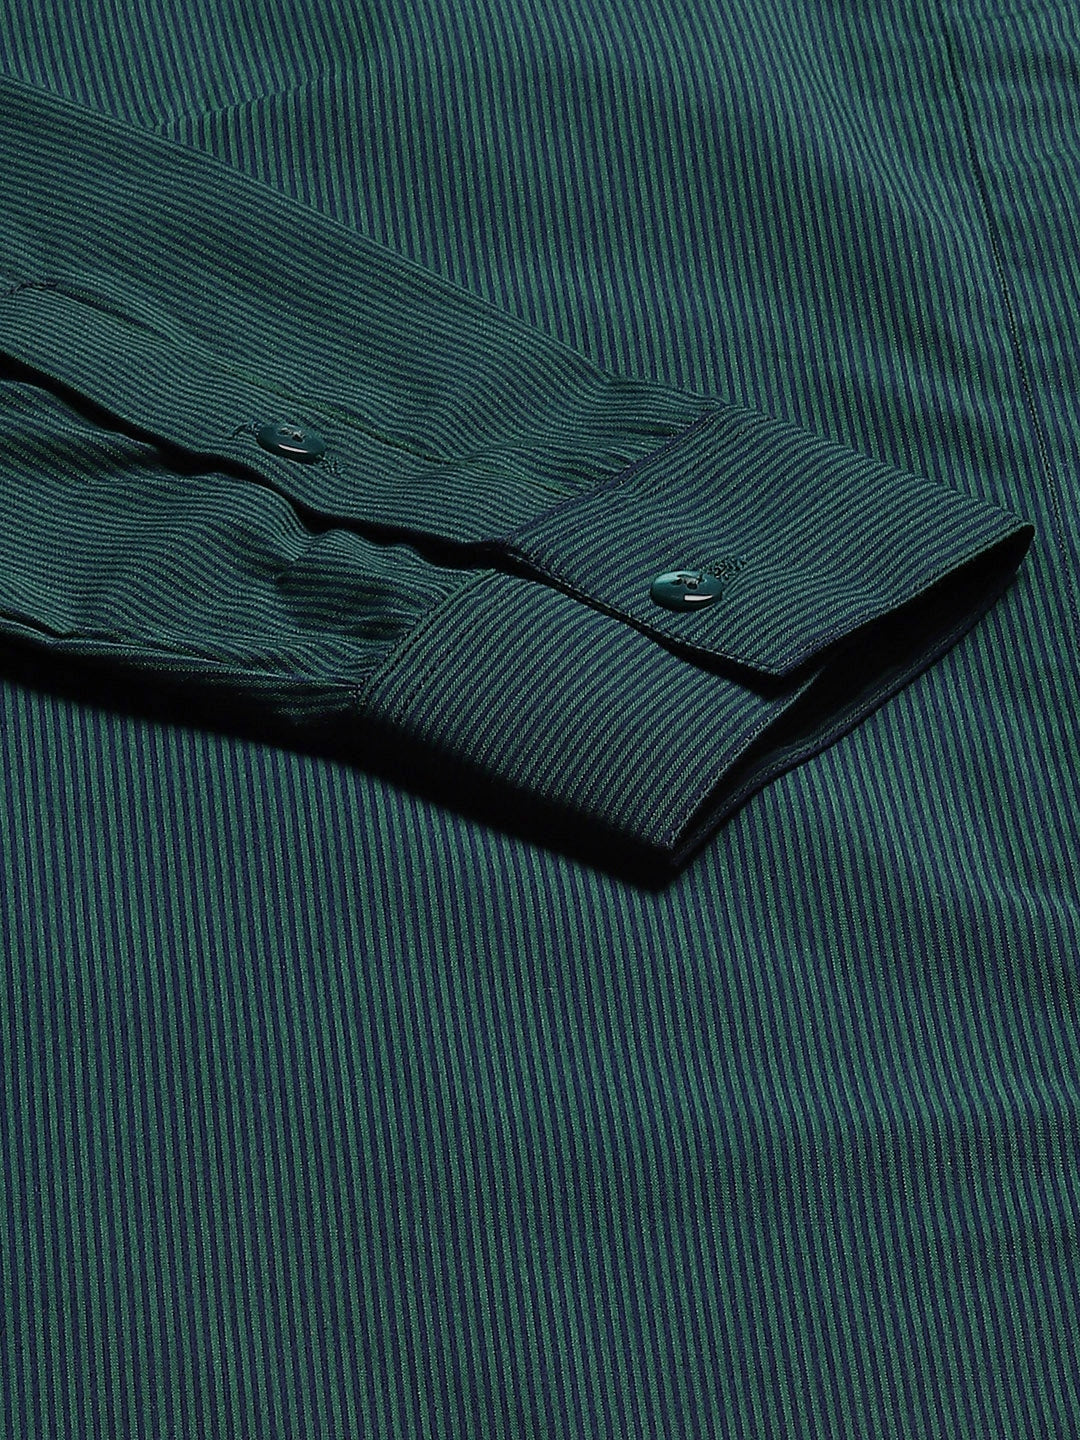 Women Green & Navy Pin Striped Cotton Slim Fit Formal Shirt